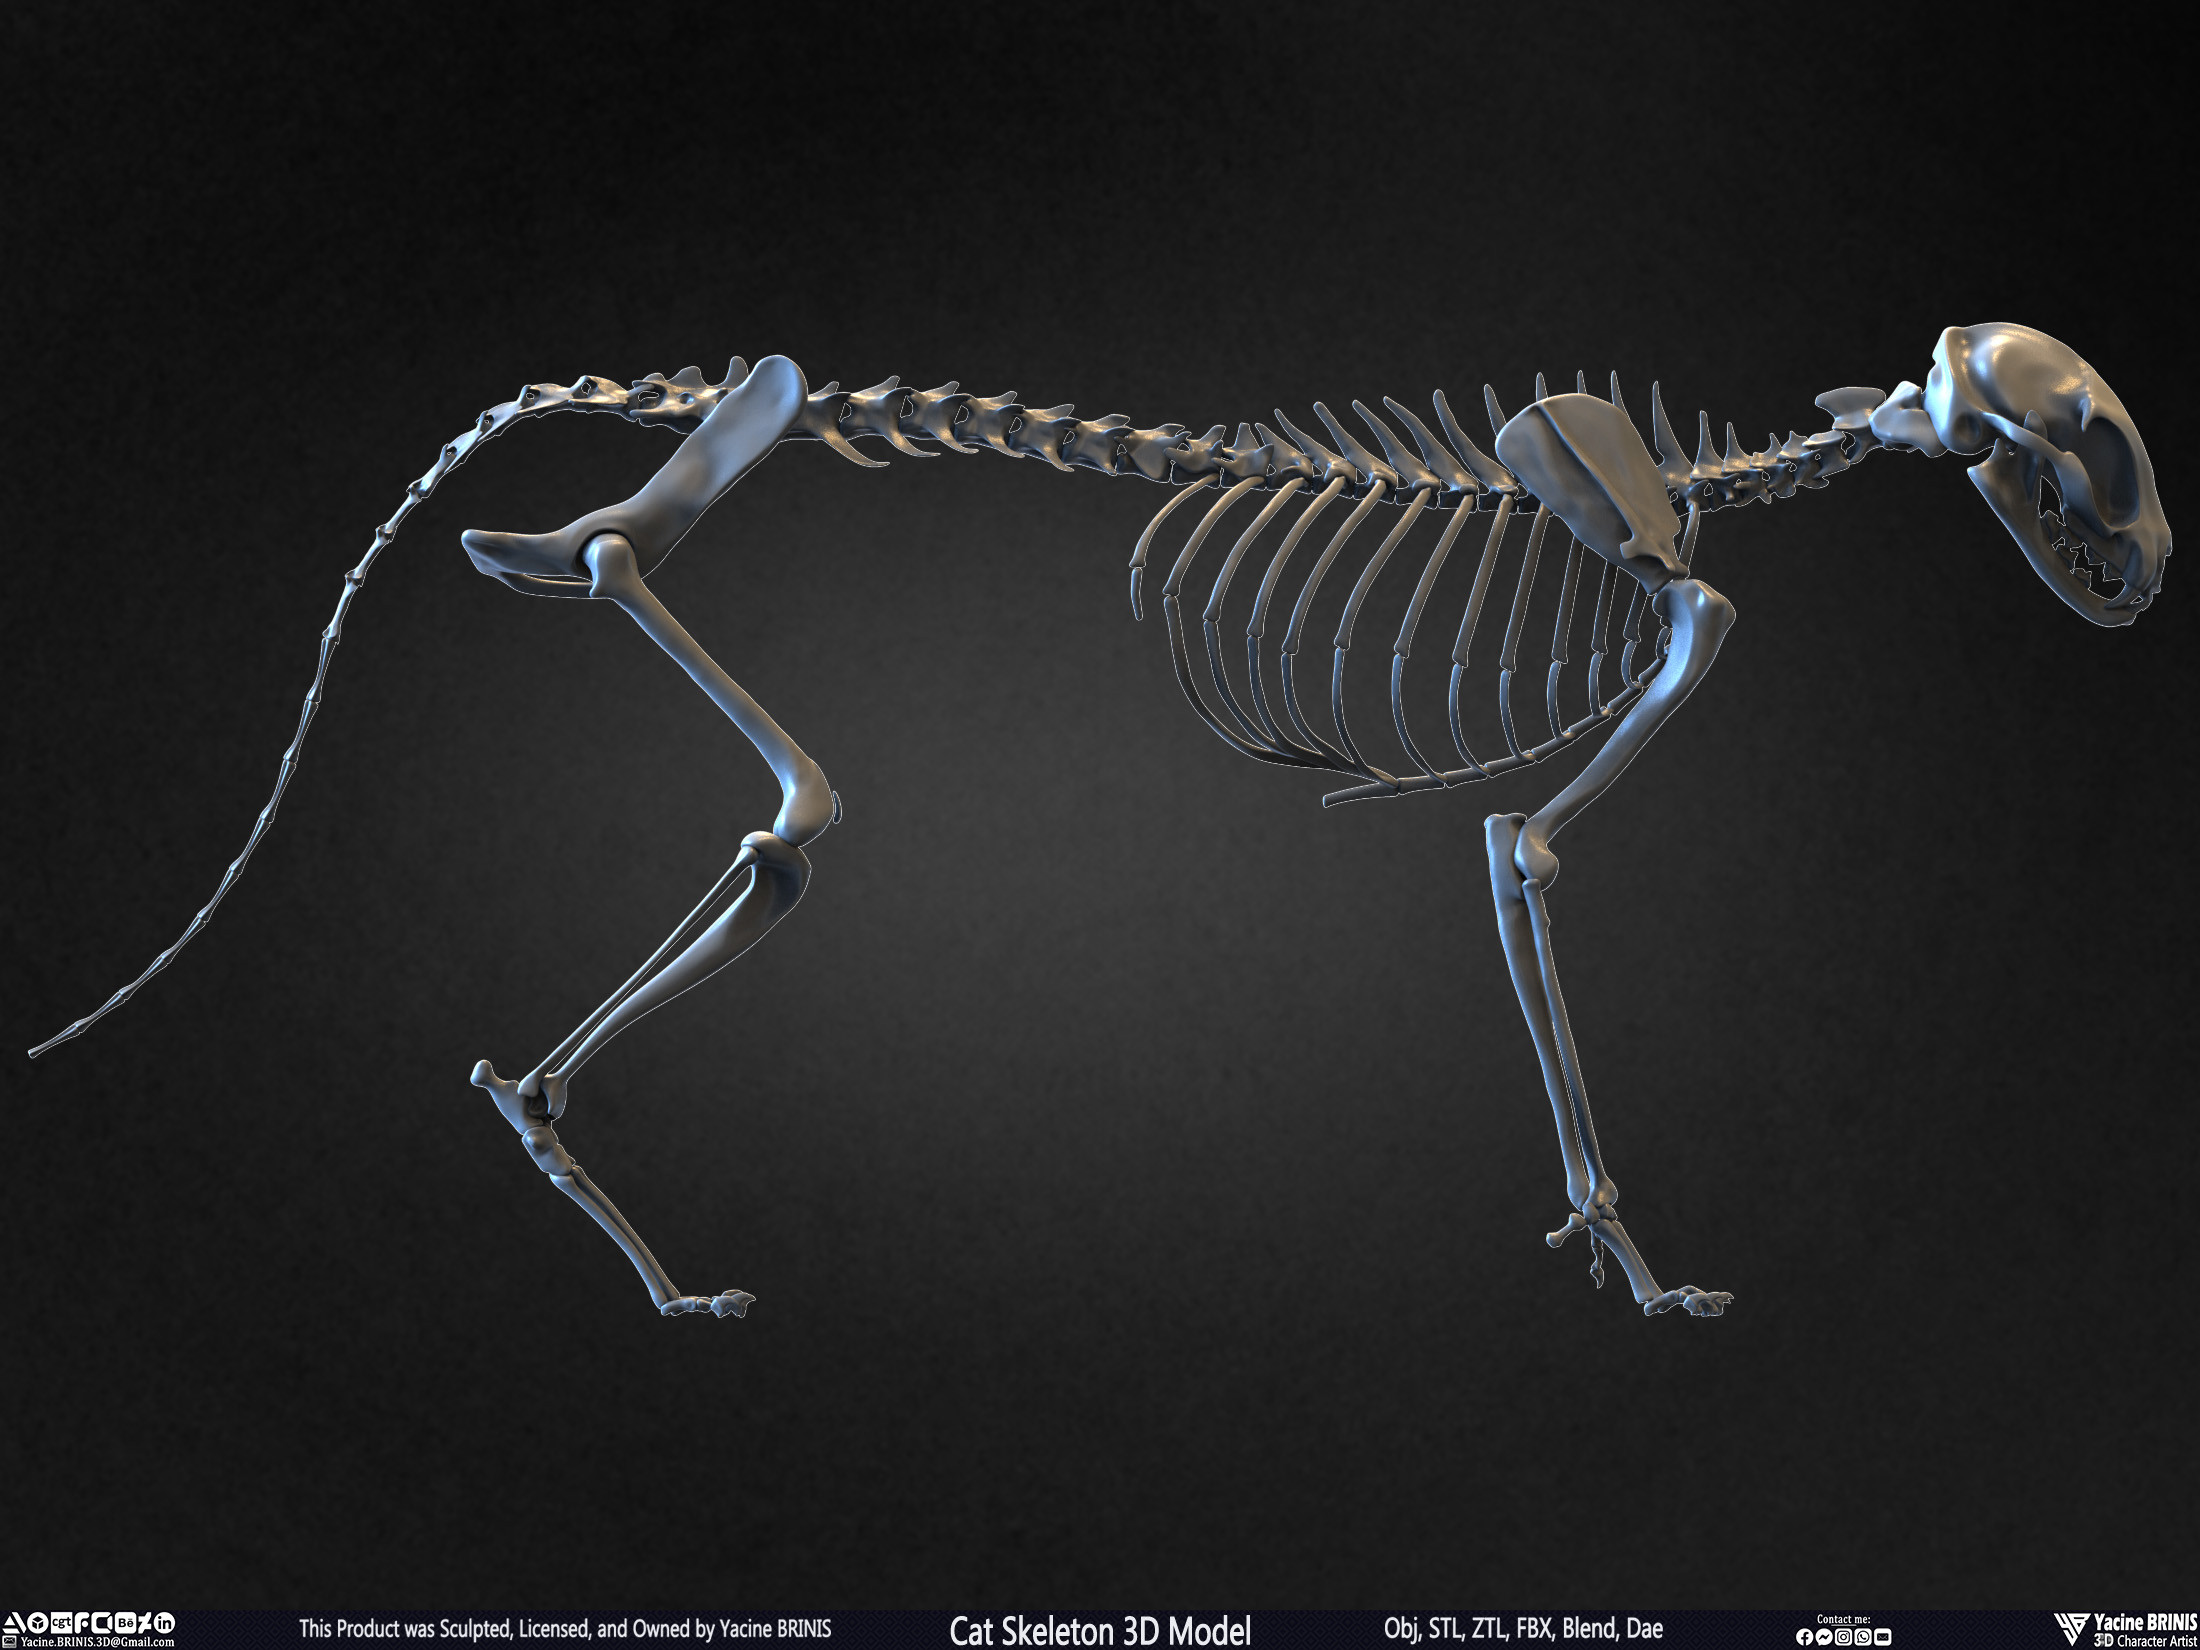 Highly Detailed Cat Skeleton 3D Model Sculpted by Yacine BRINIS Set 024